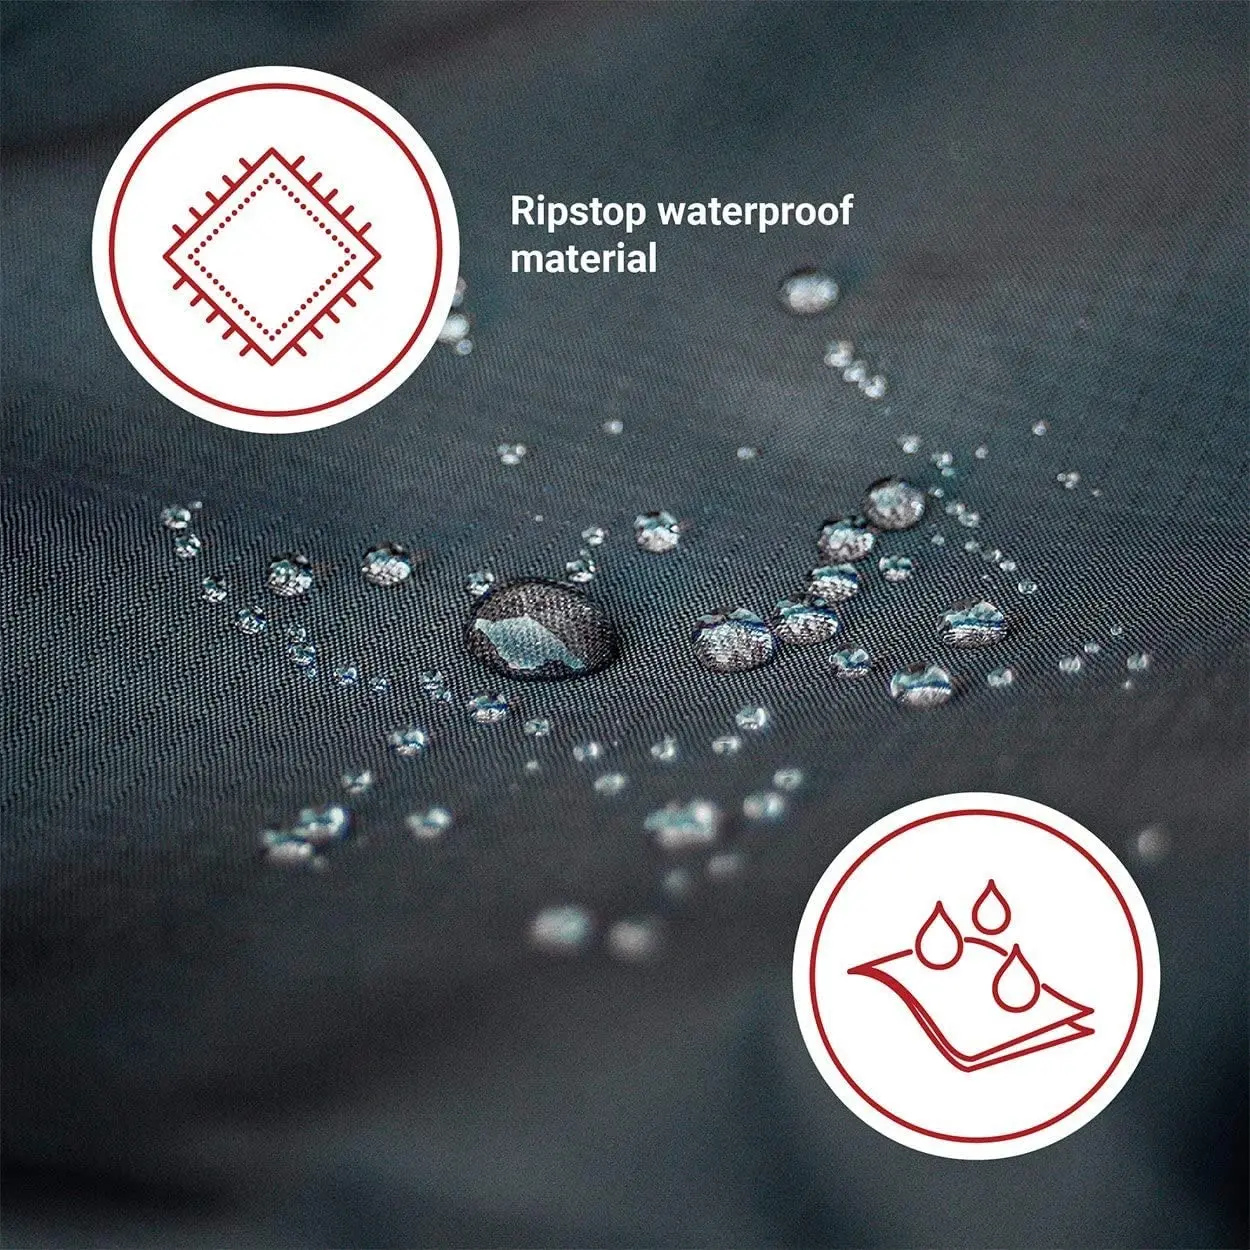 Waterproof Sun Protection Auti UV Rain Snow Polyester Car Body Cover Cotton black Customized Universal